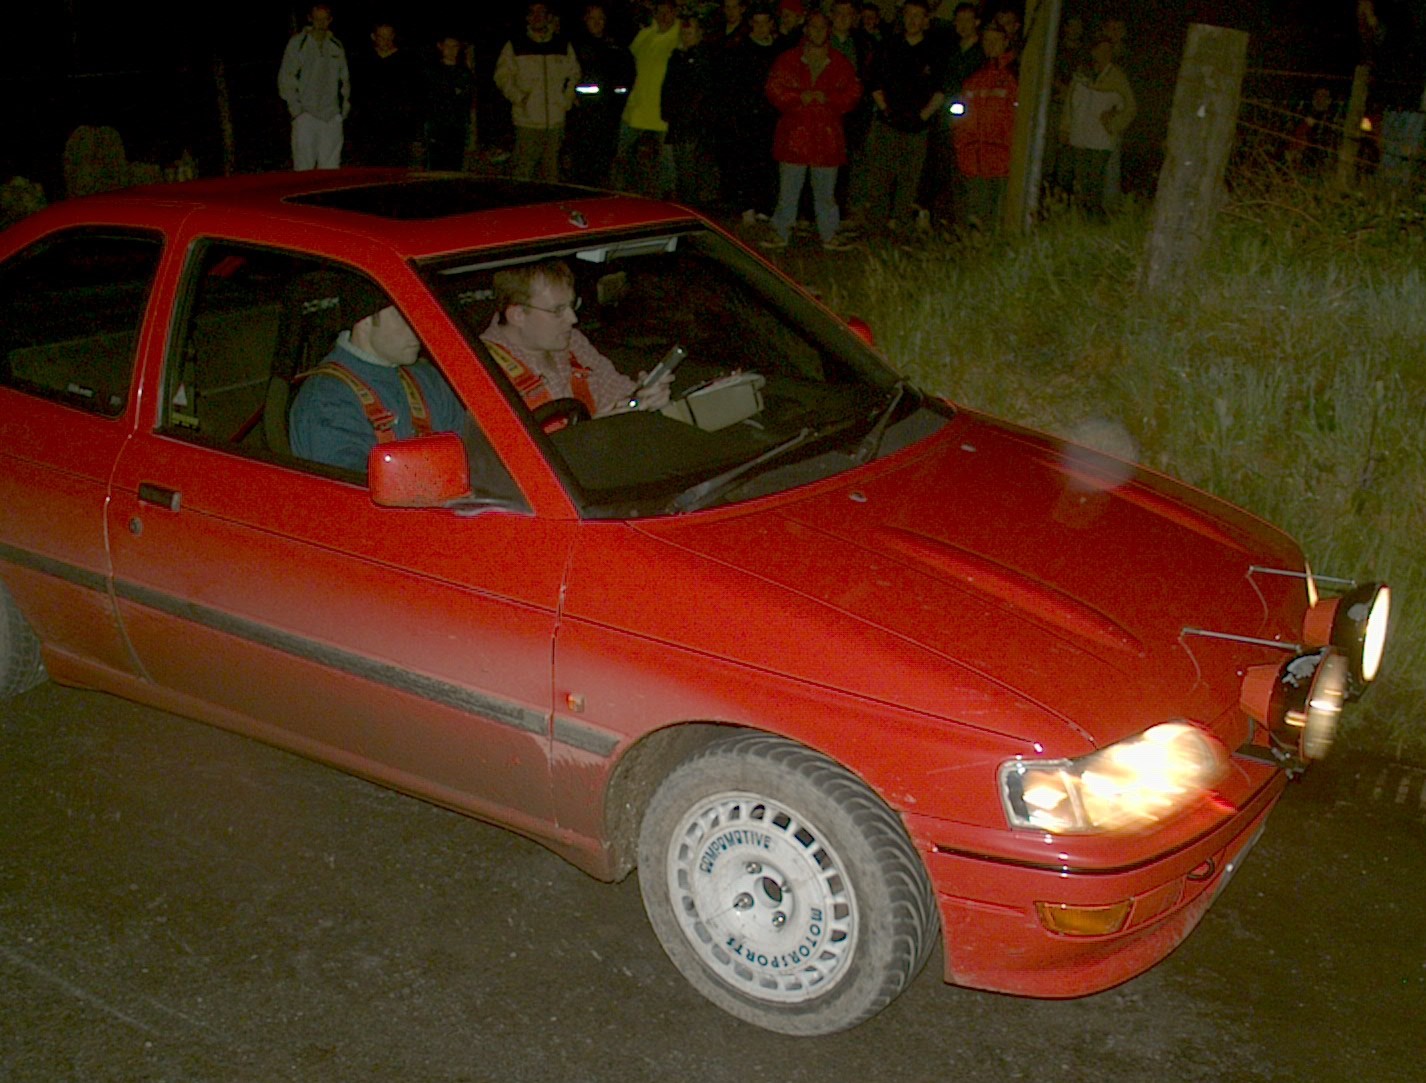 Barcud Motor Club Rally 2002